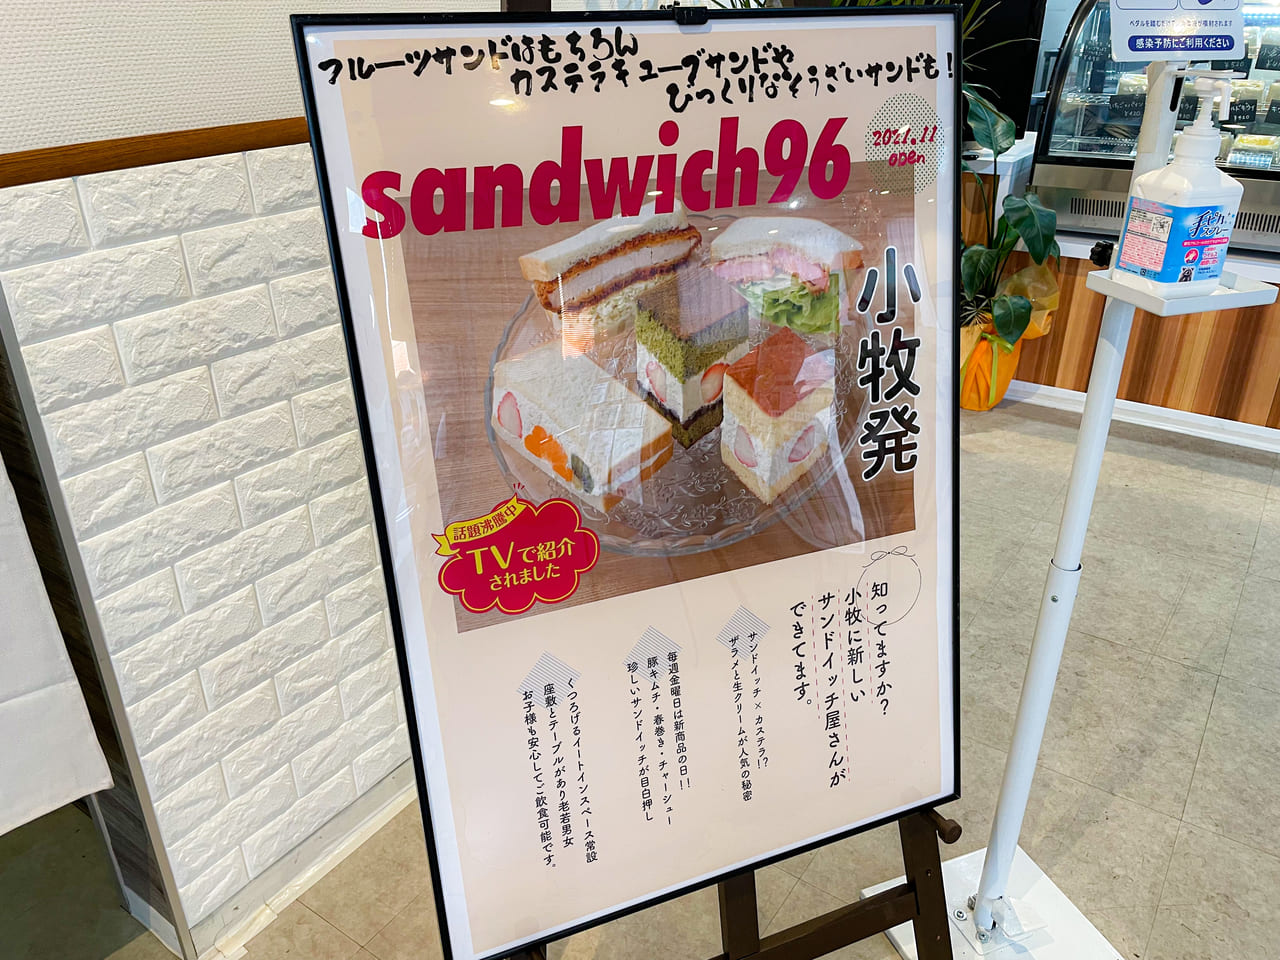 sandwich'96